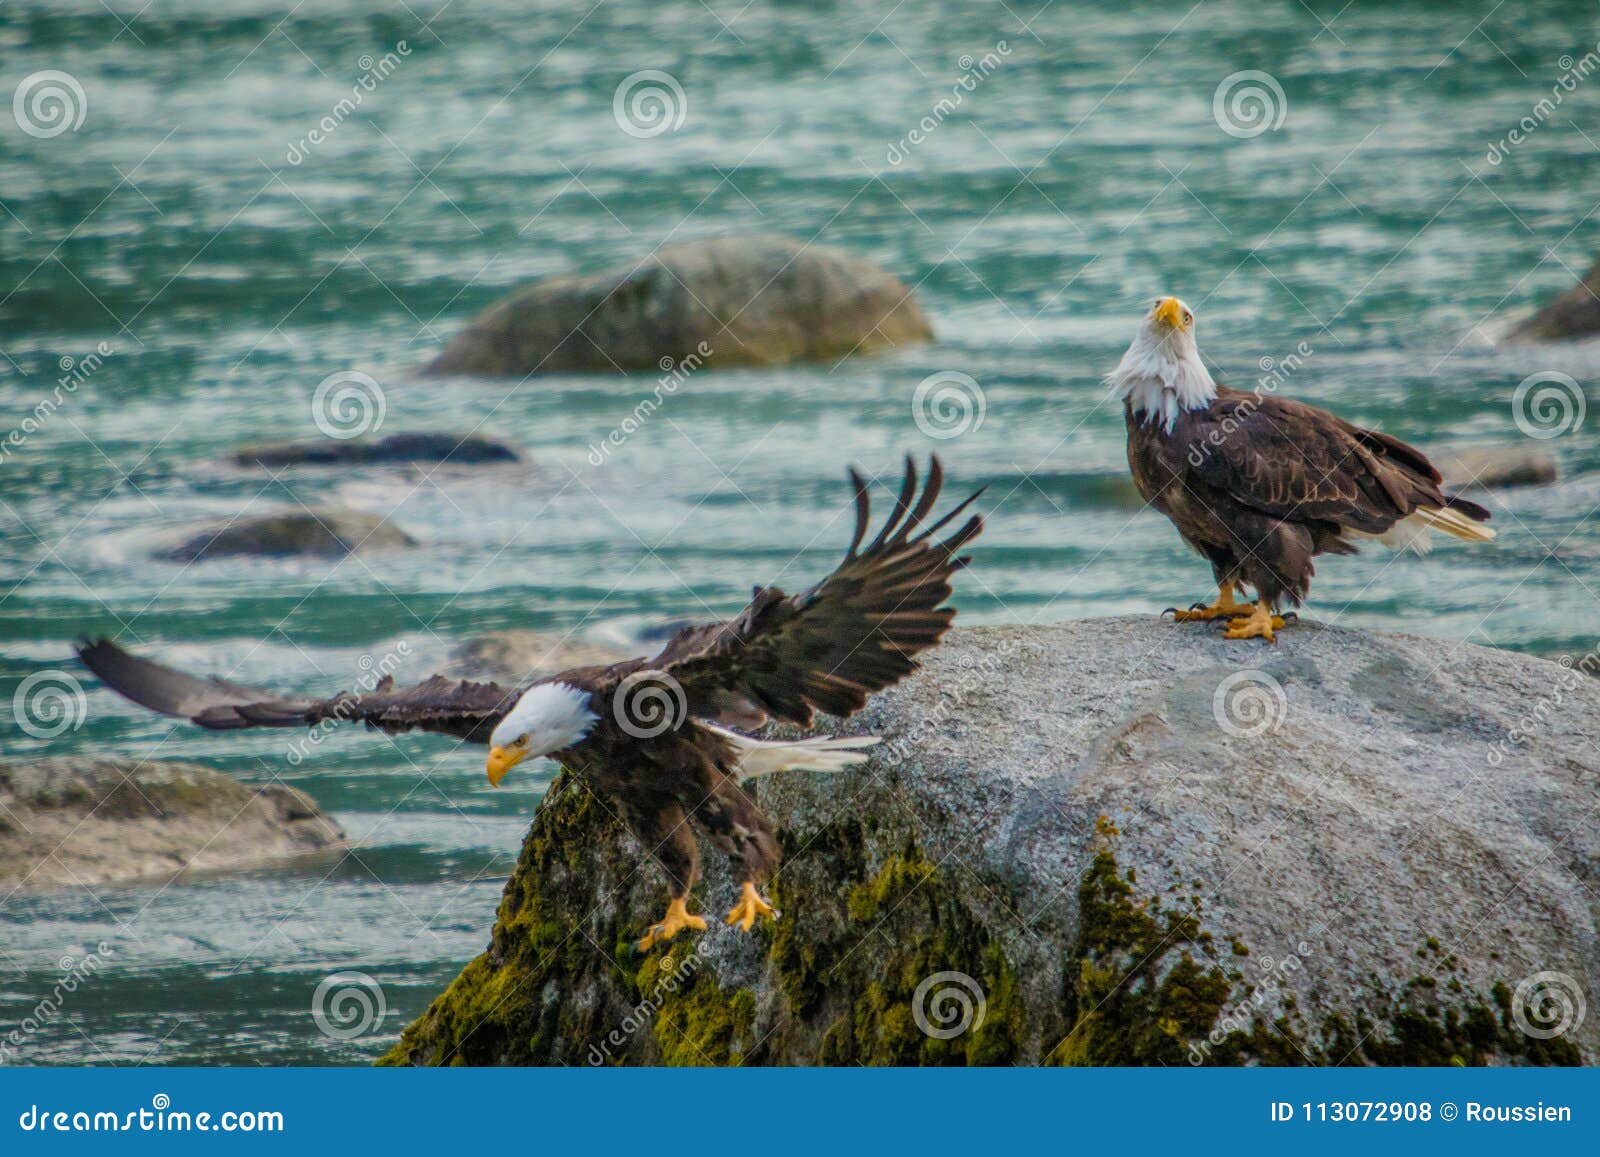 wild experience of bald eagles in chilkat bald egle reserve, alaska